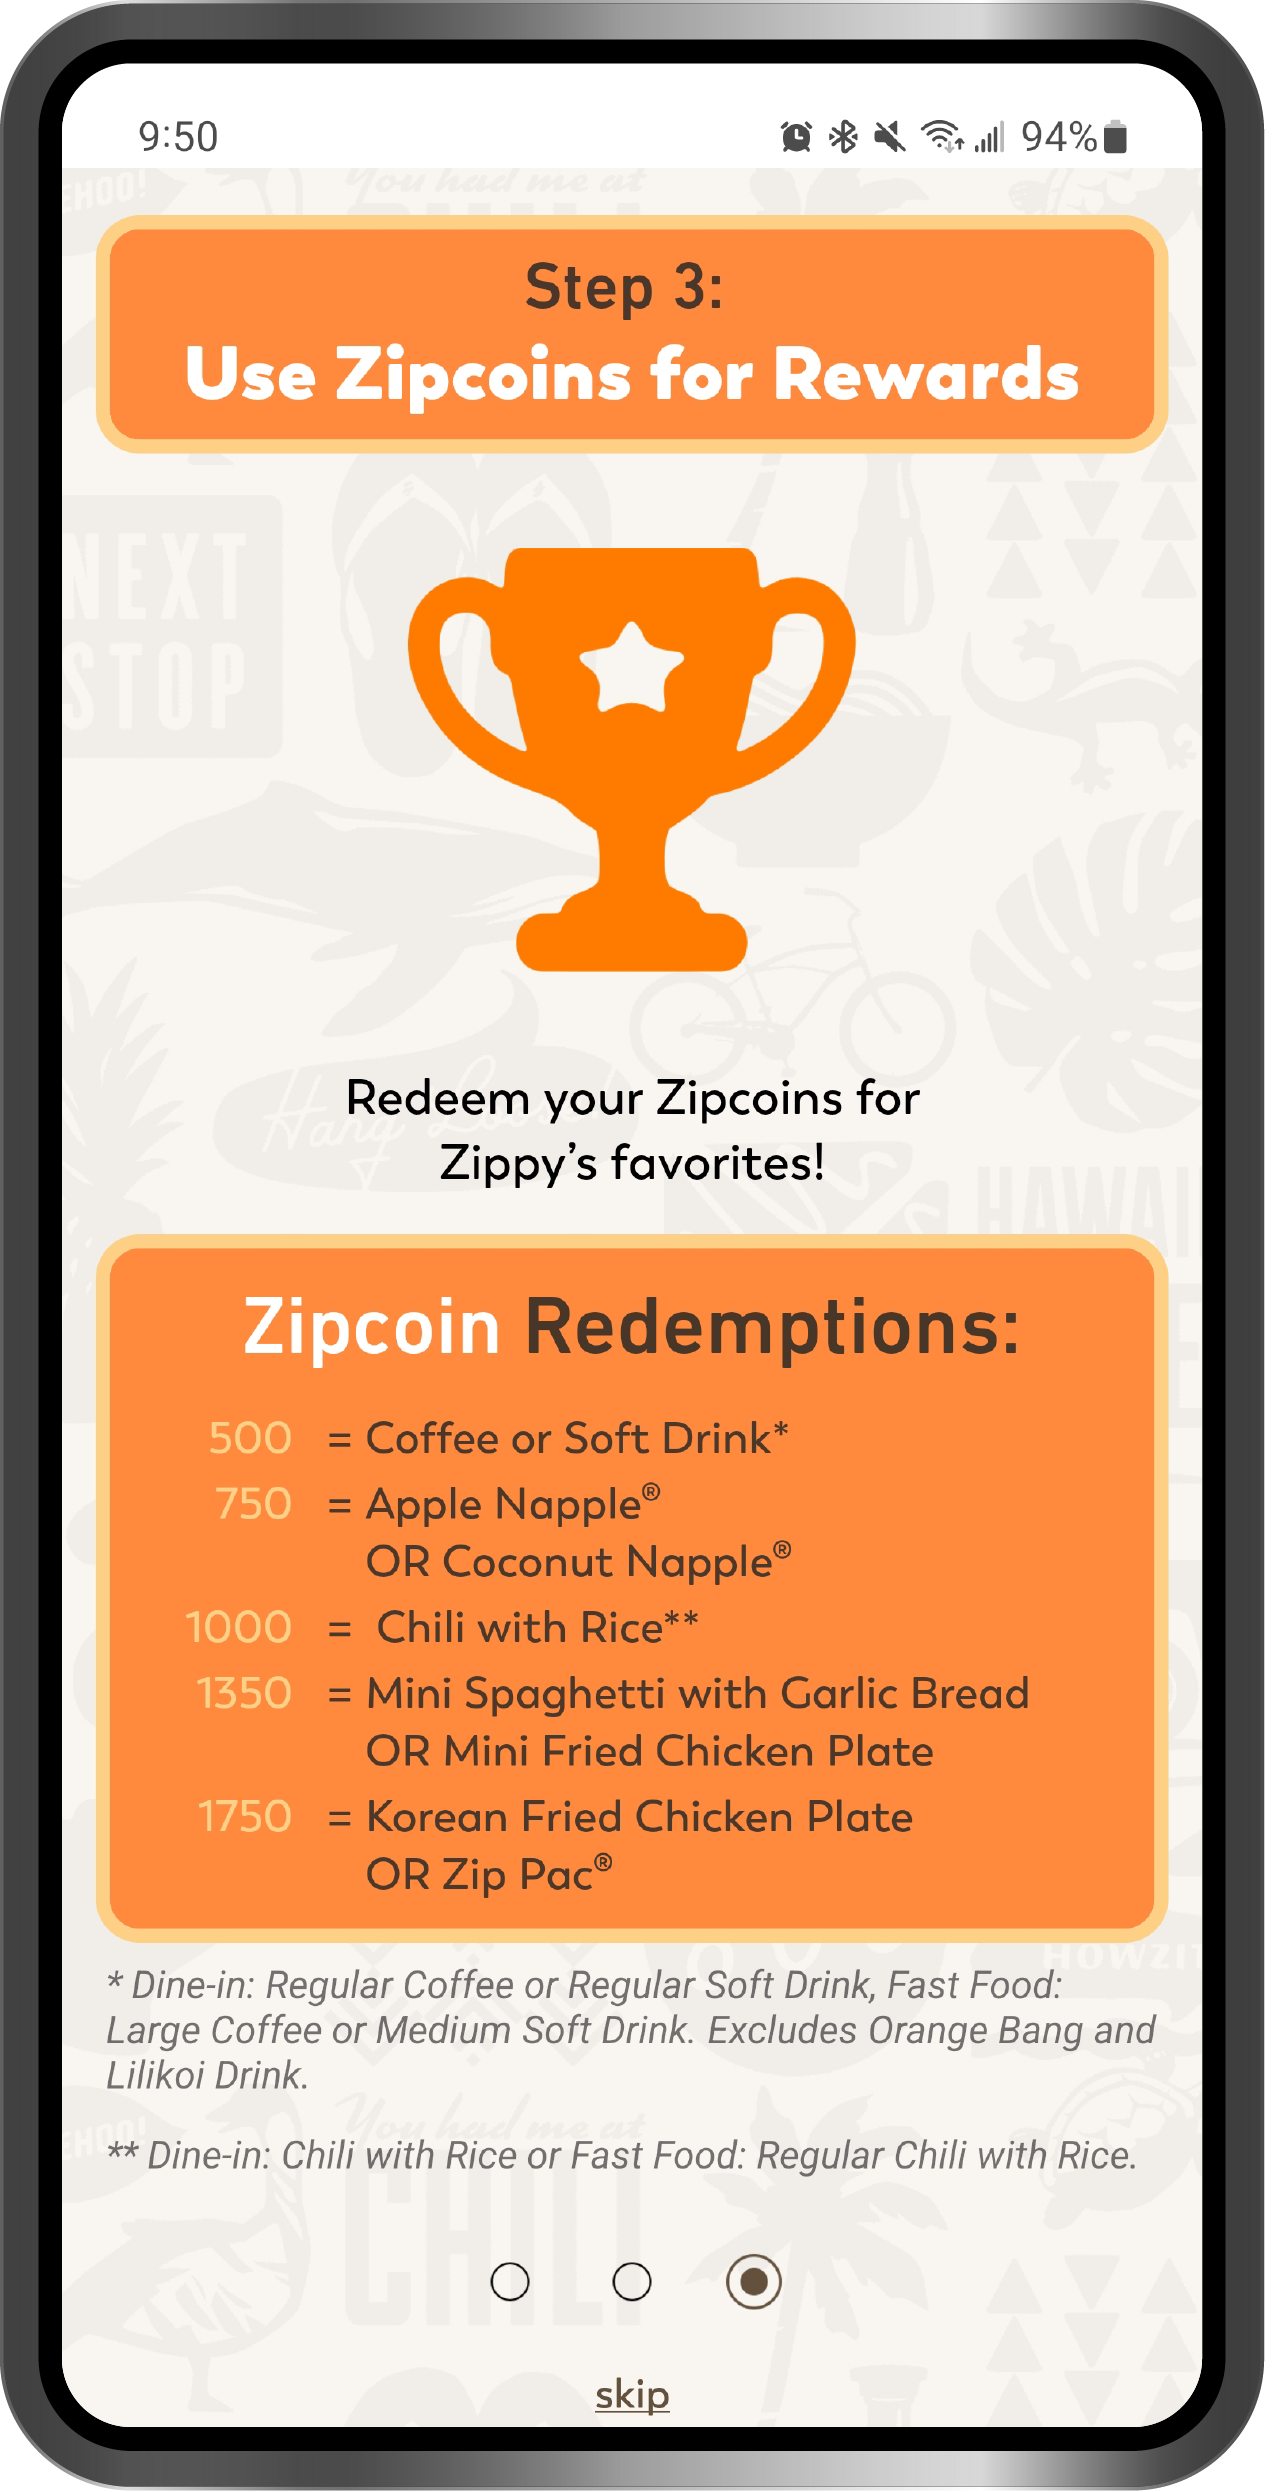 How to redeem Zipsters Rewards